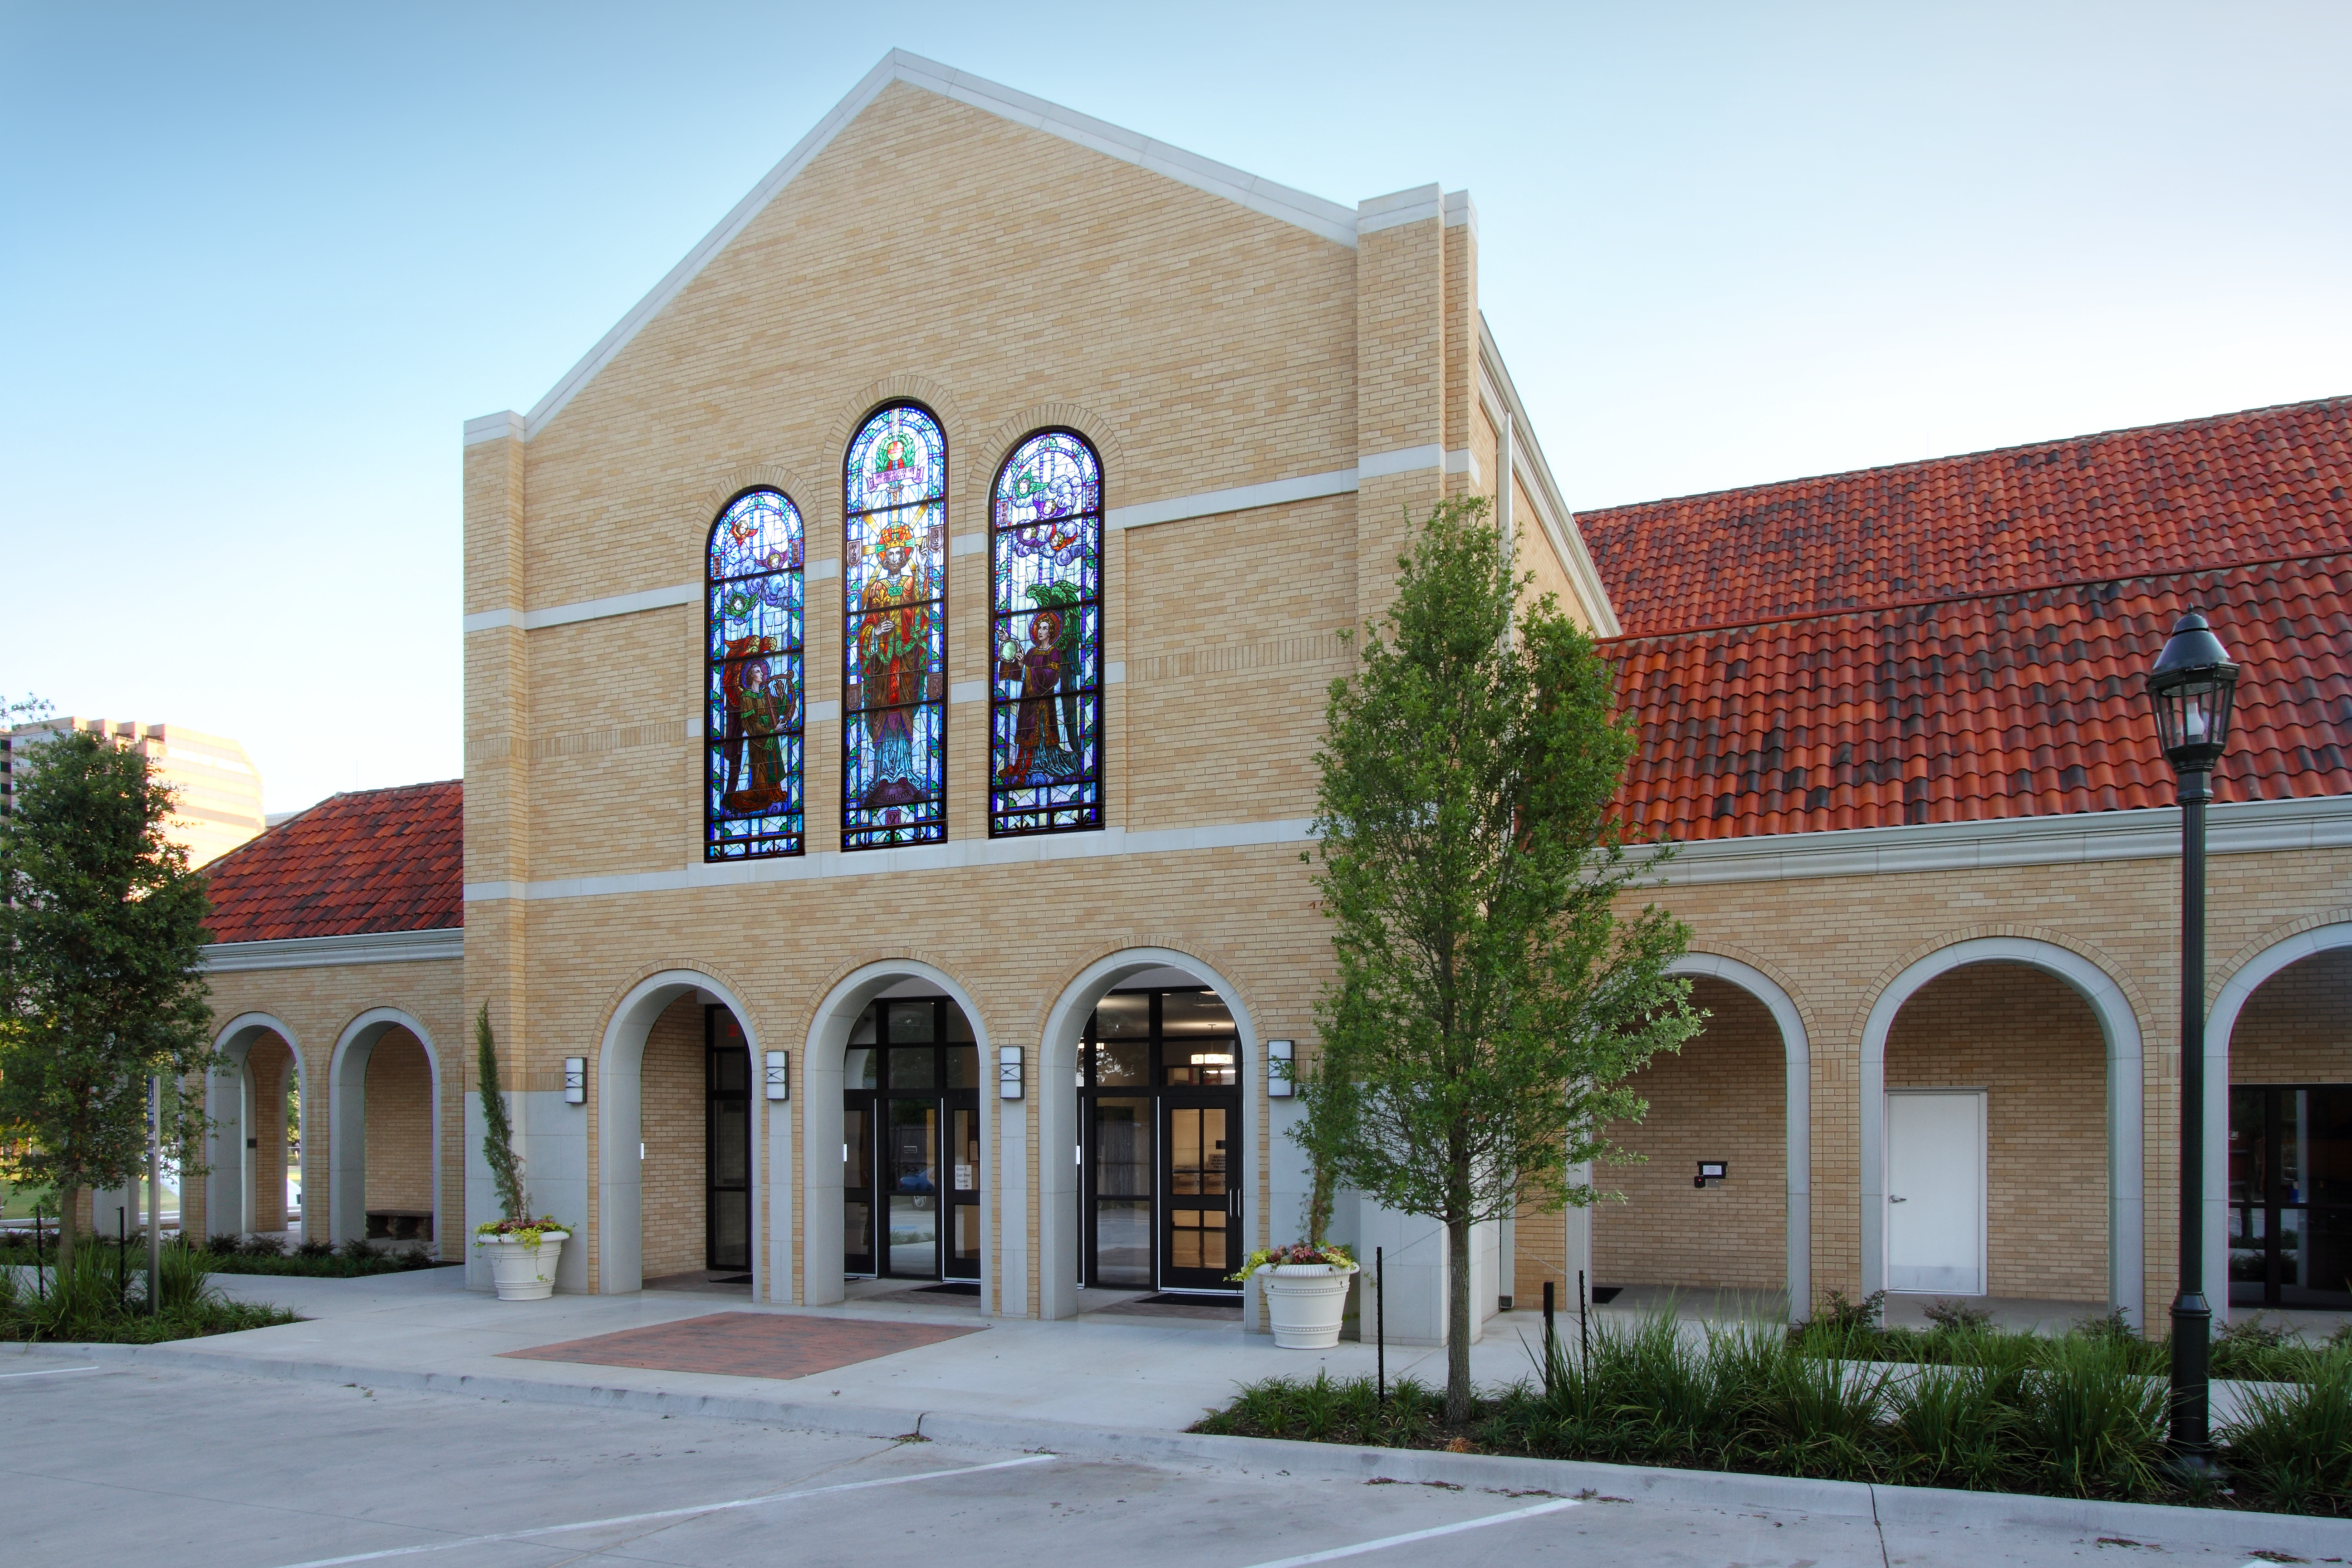  Christ the King Catholic Church | Parish Community Center category